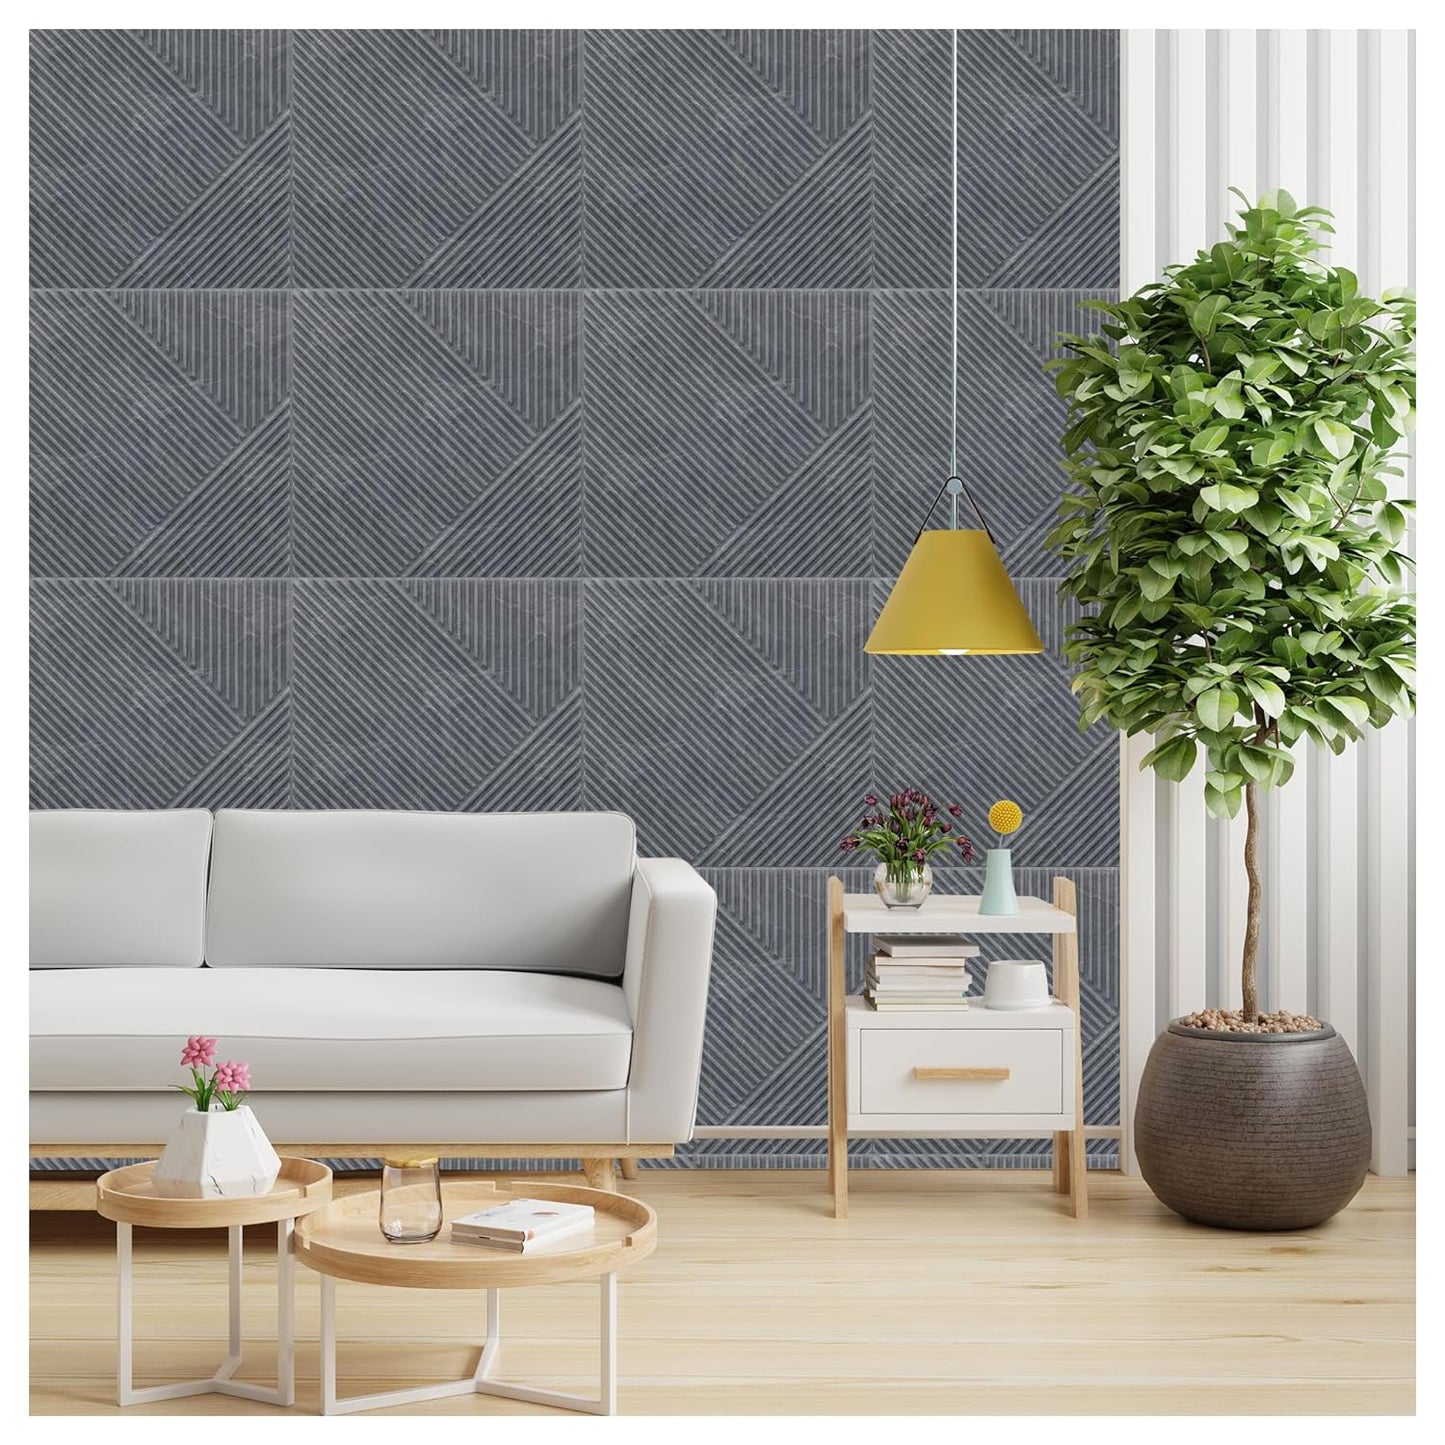 Kayra Decor 3D Self Adhesive Wall Panel - Grey Color Stripe Design - 50 X 50 cm